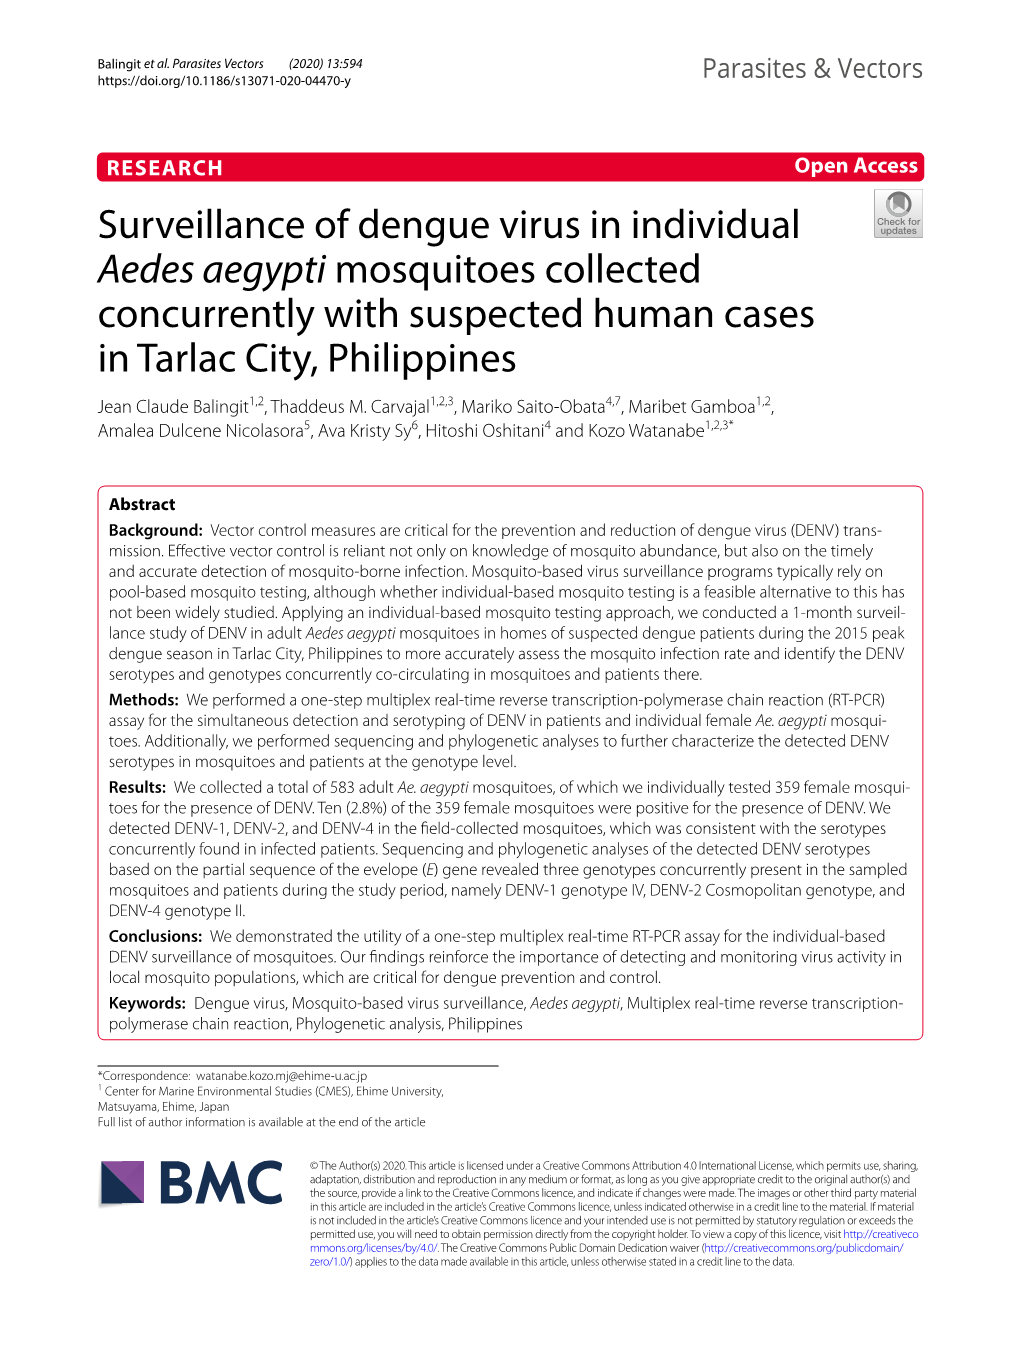 Surveillance of Dengue Virus in Individual Aedes Aegypti